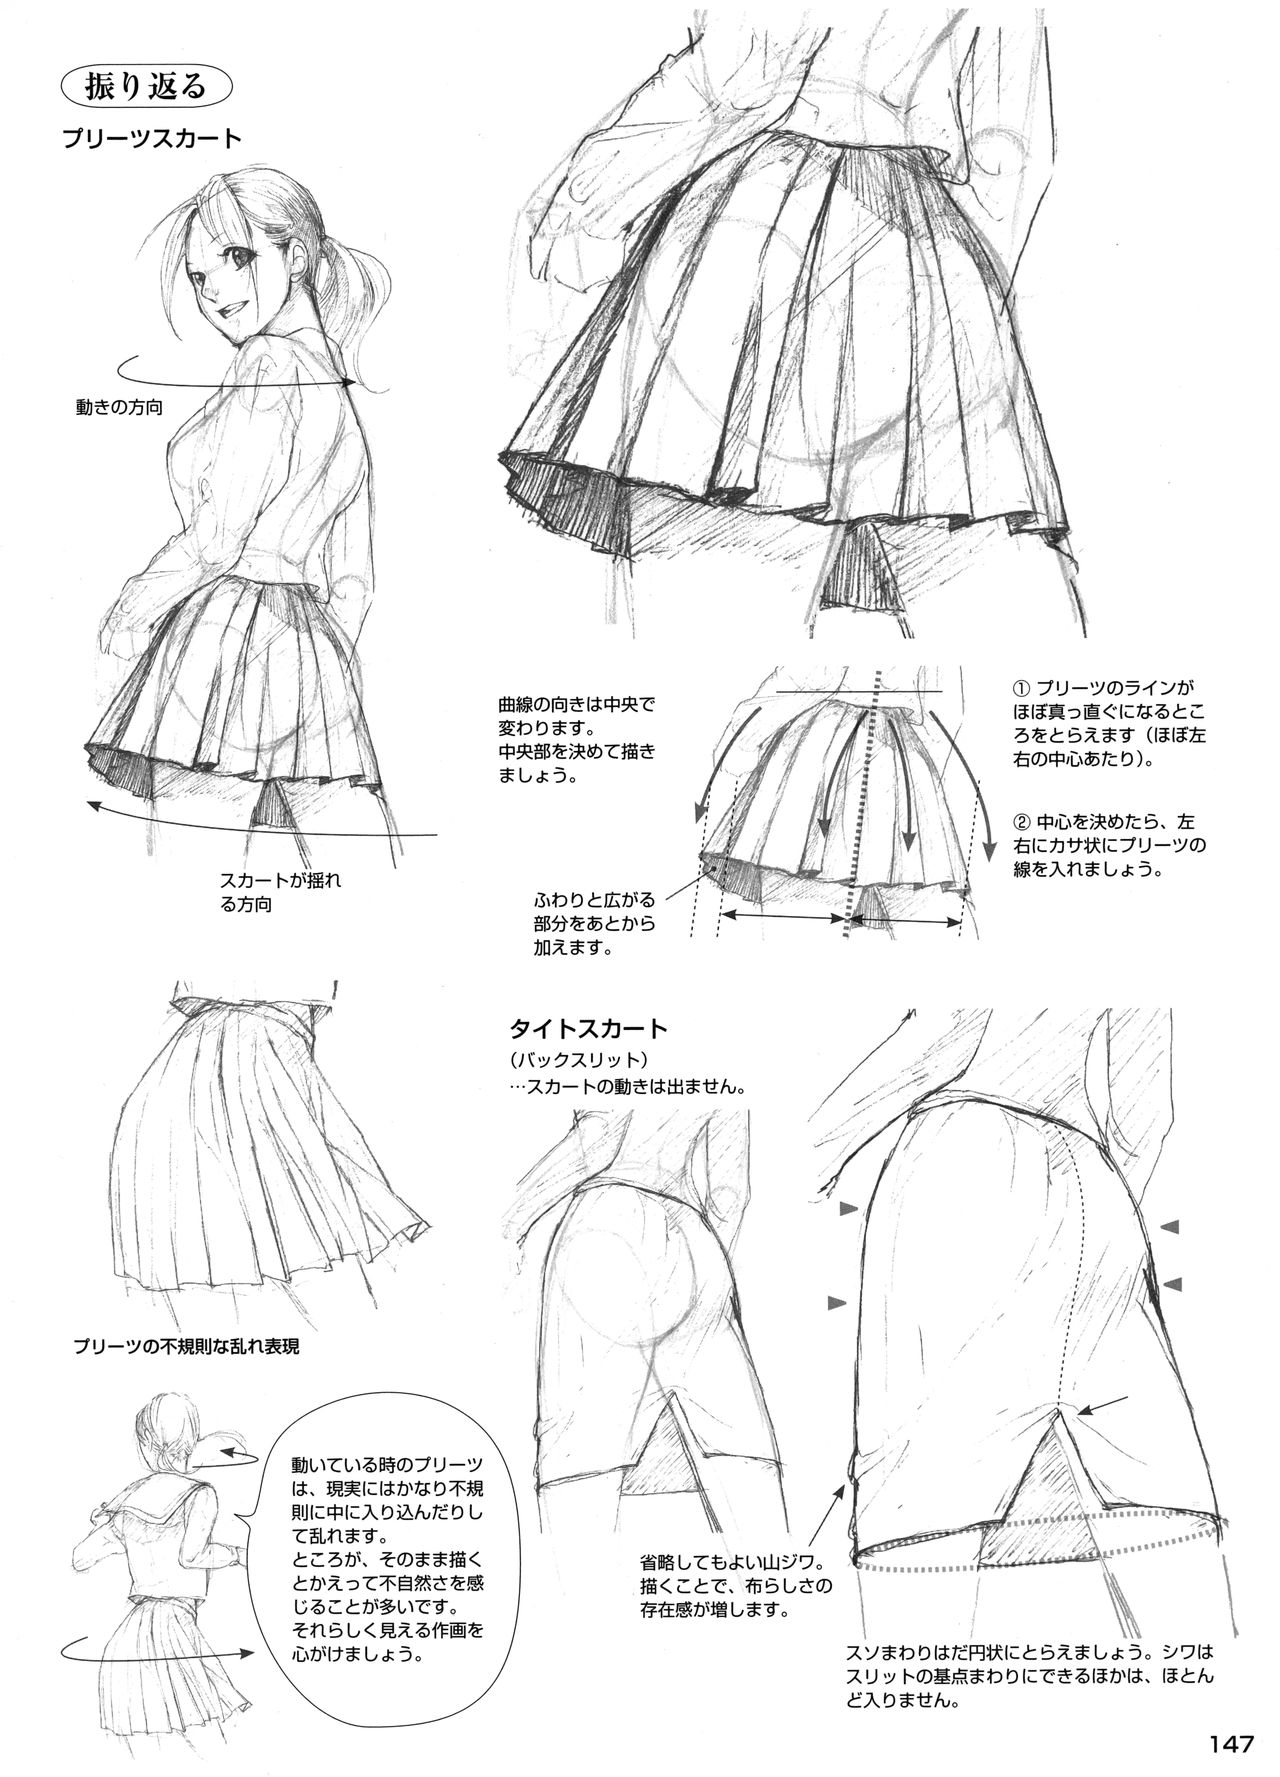 Manga no Kiso Dessin - Onnanoko Costume hen 147